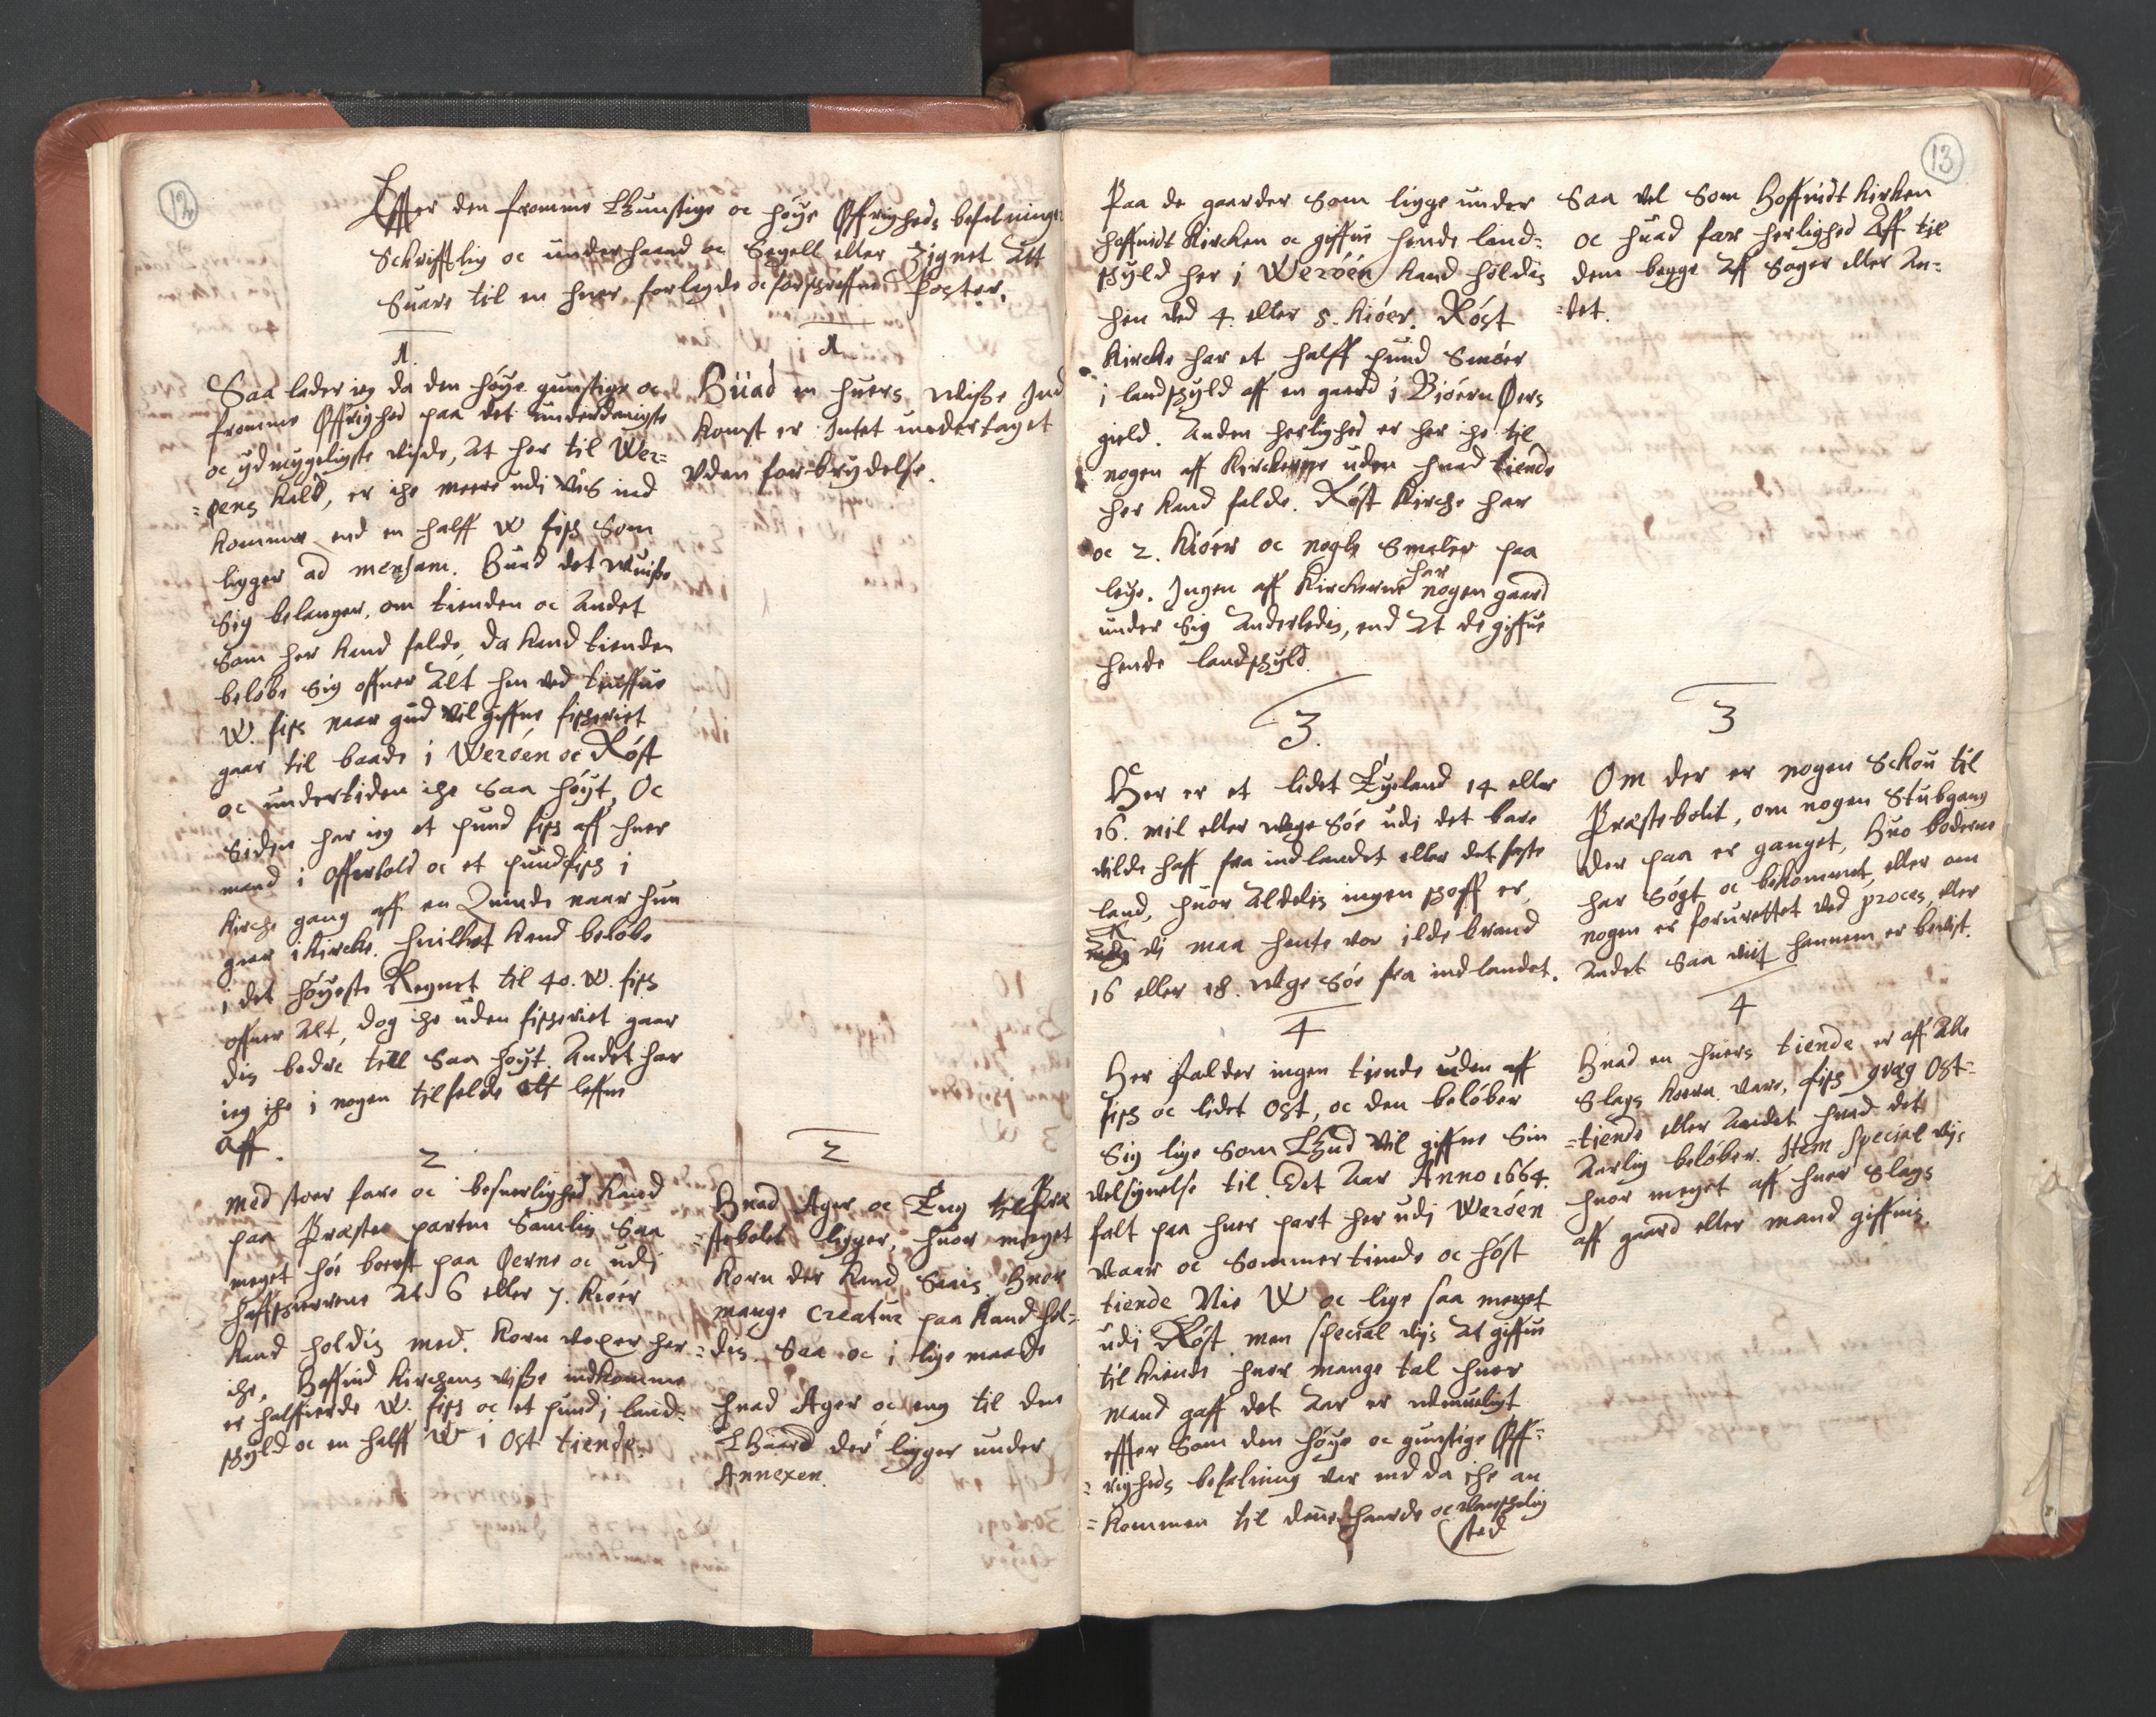 RA, Vicar's Census 1664-1666, no. 36: Lofoten and Vesterålen deanery, Senja deanery and Troms deanery, 1664-1666, p. 12-13